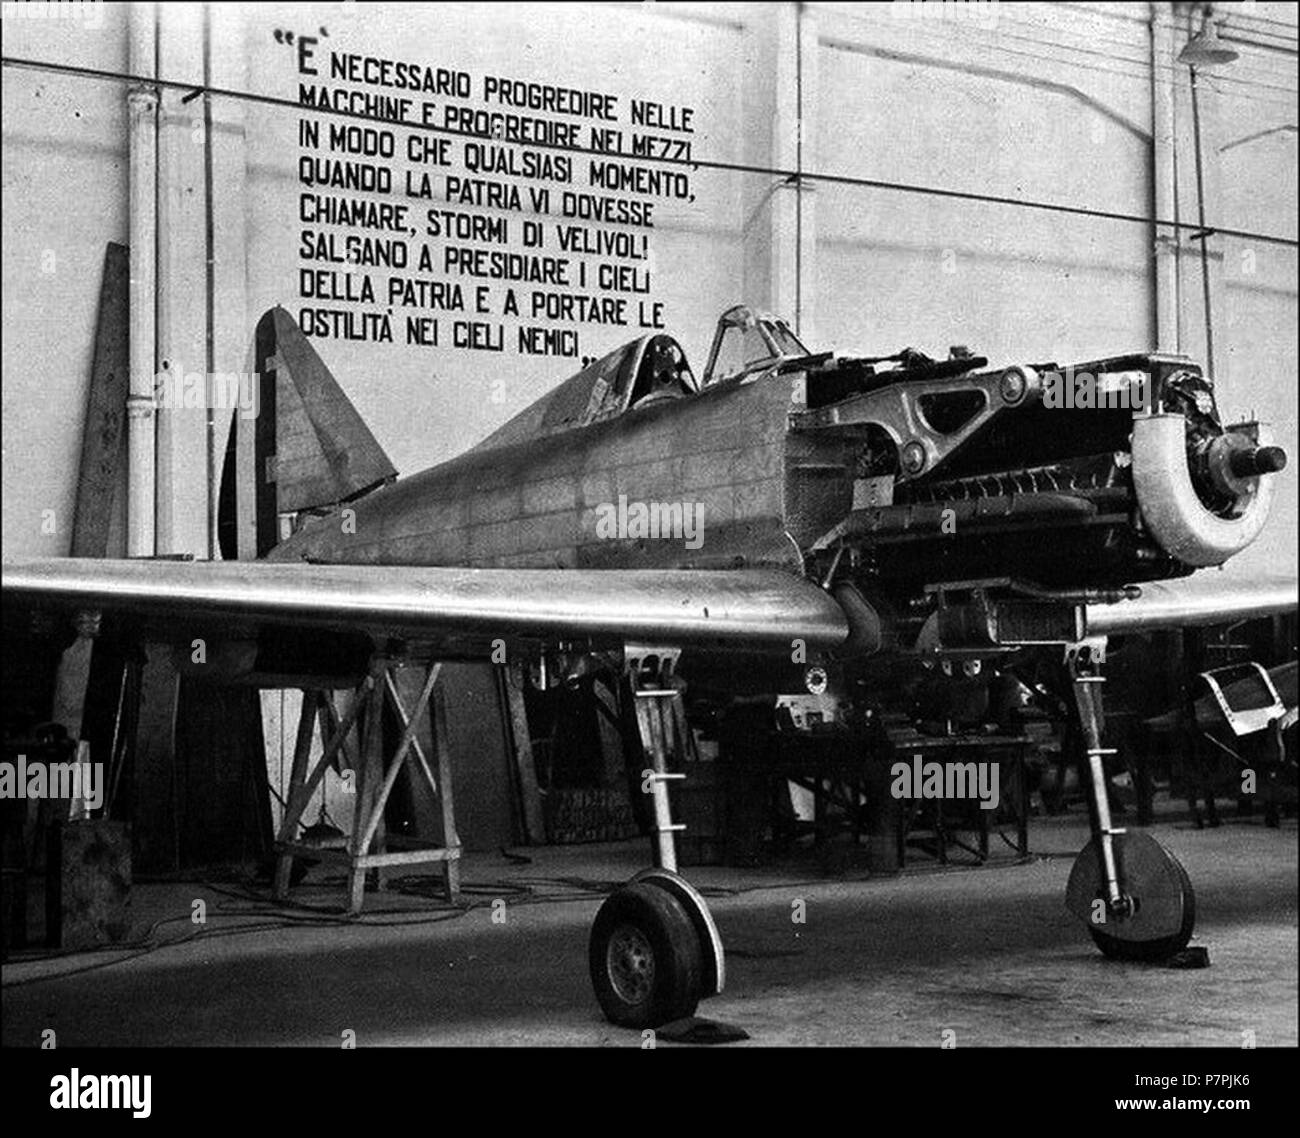 EPSON scanner Bild 292 Officine Meccaniche, aereo da caccia Reggiane RE 2001, 1940 - San dl SAN IMG -00001406 Stockfoto